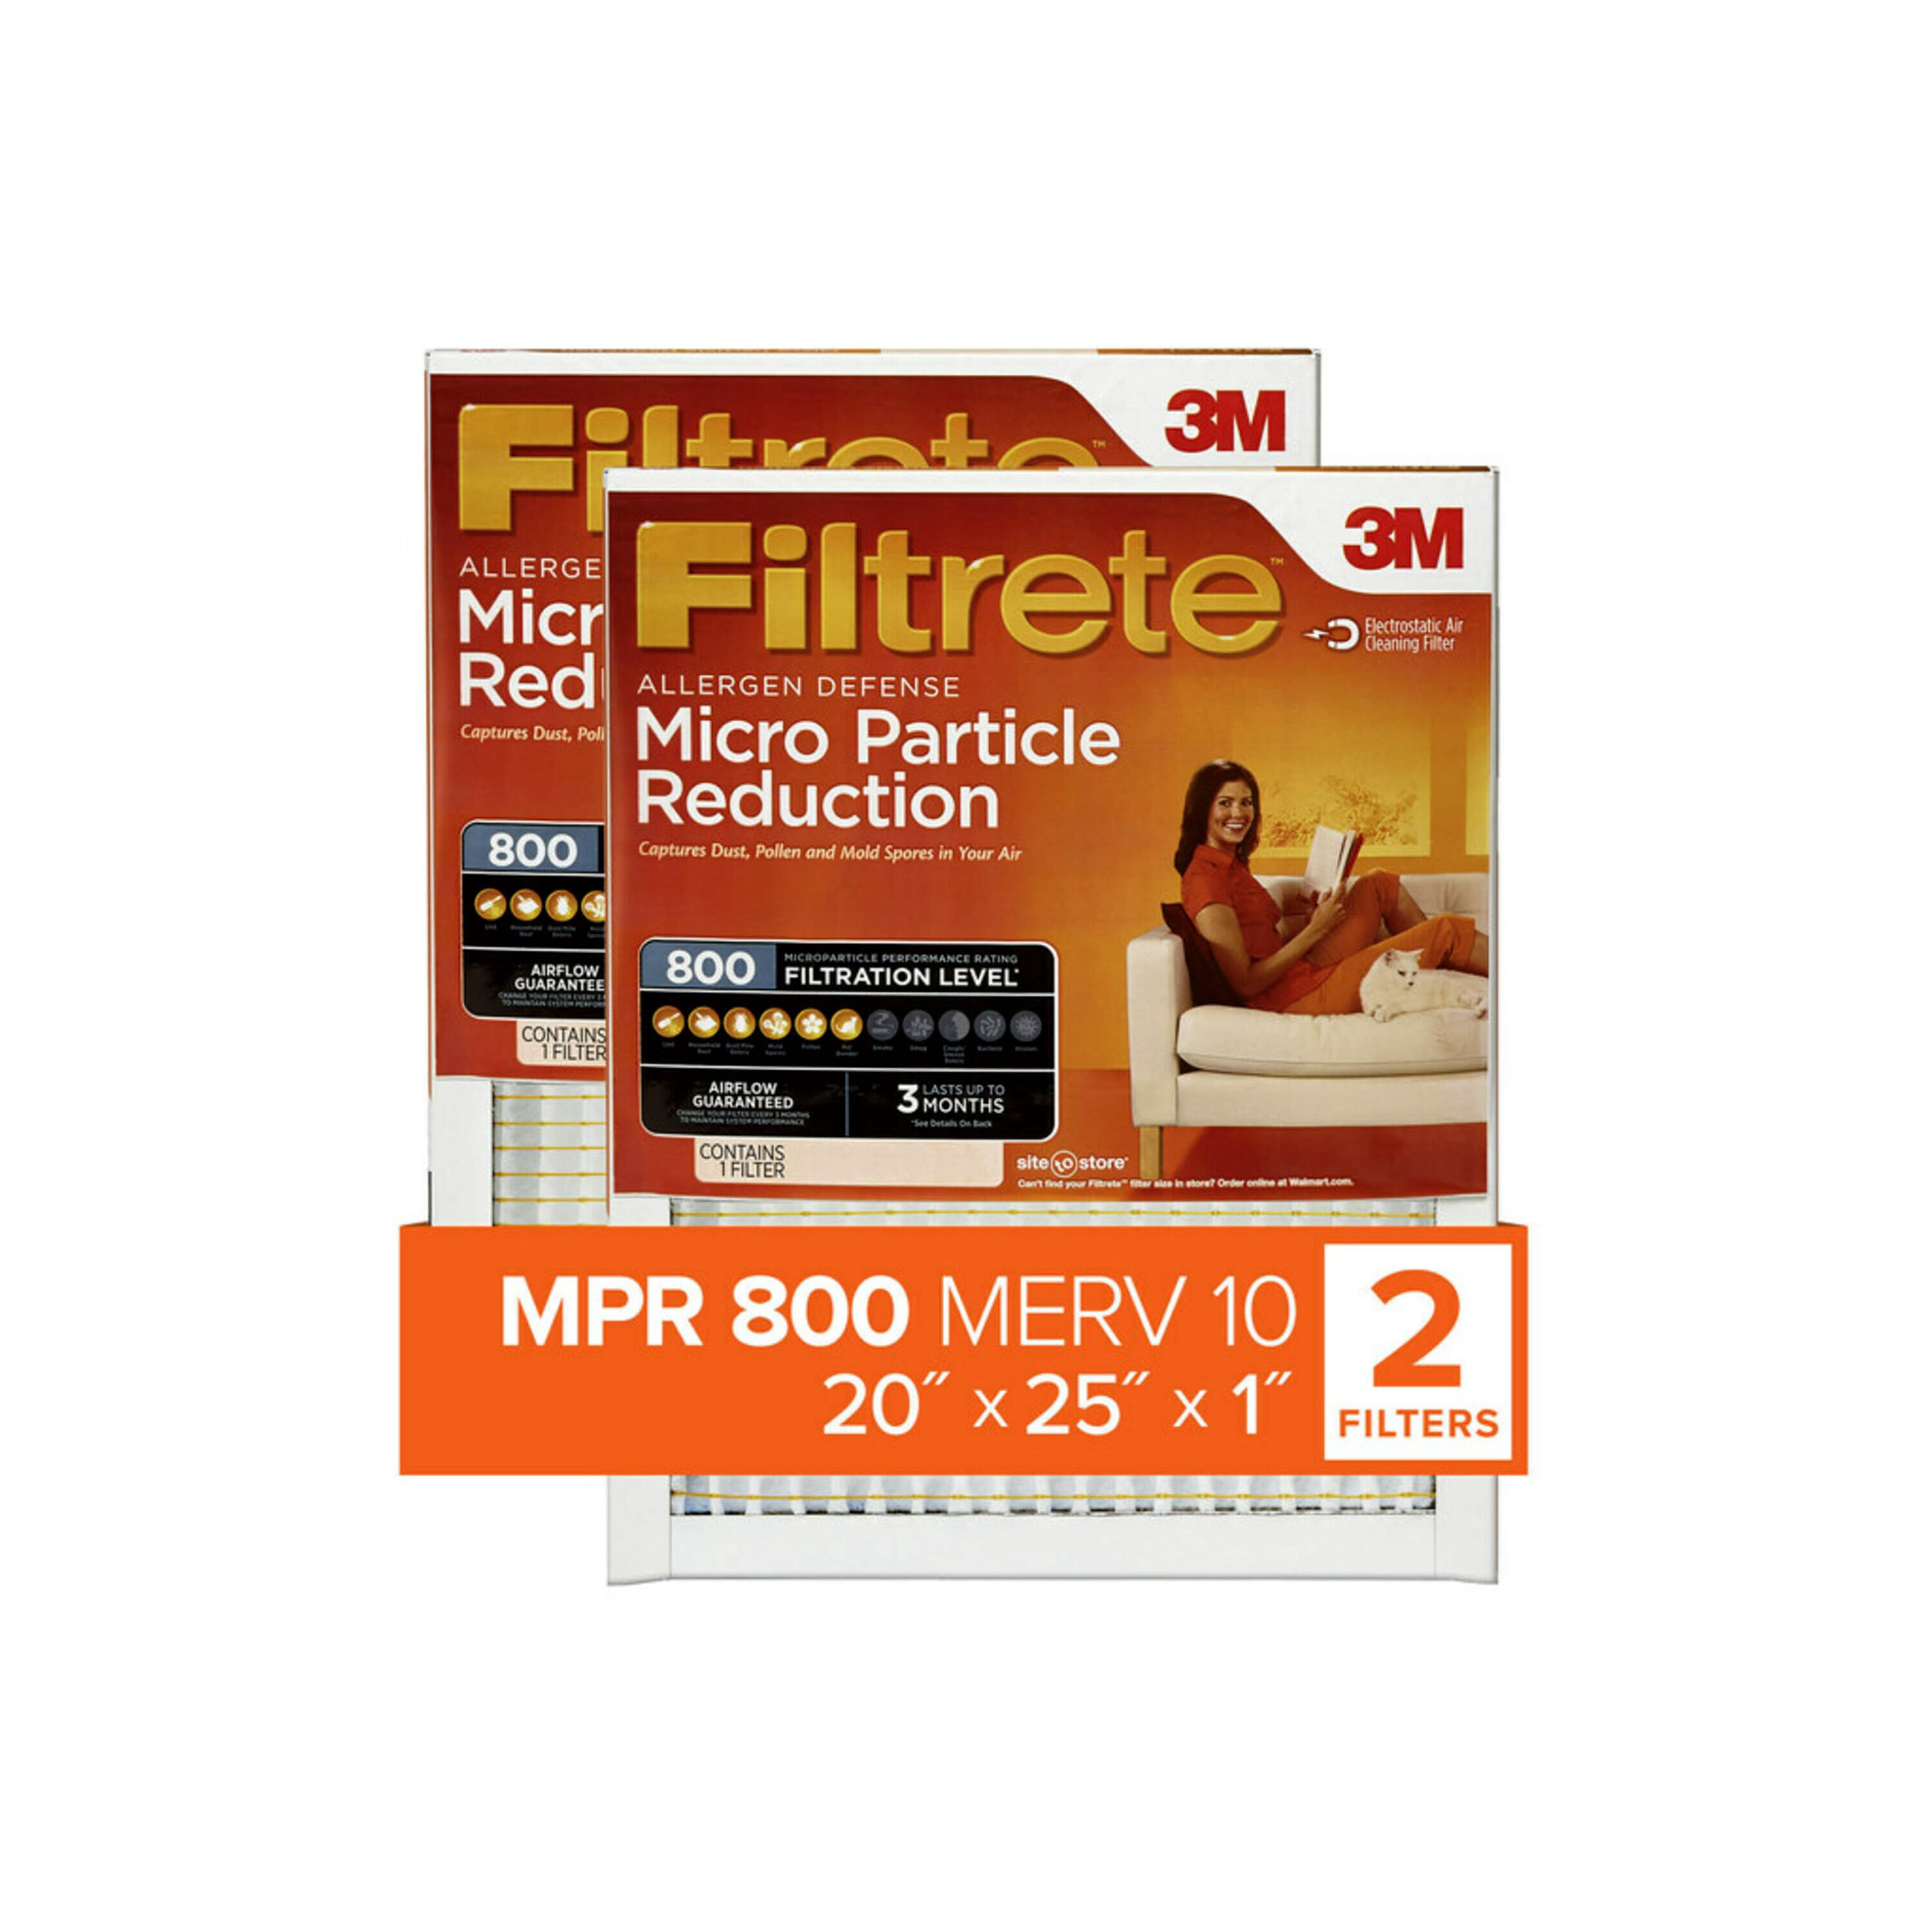 filtrete-20x25x1-allergen-defense-micro-particle-reduction-hvac